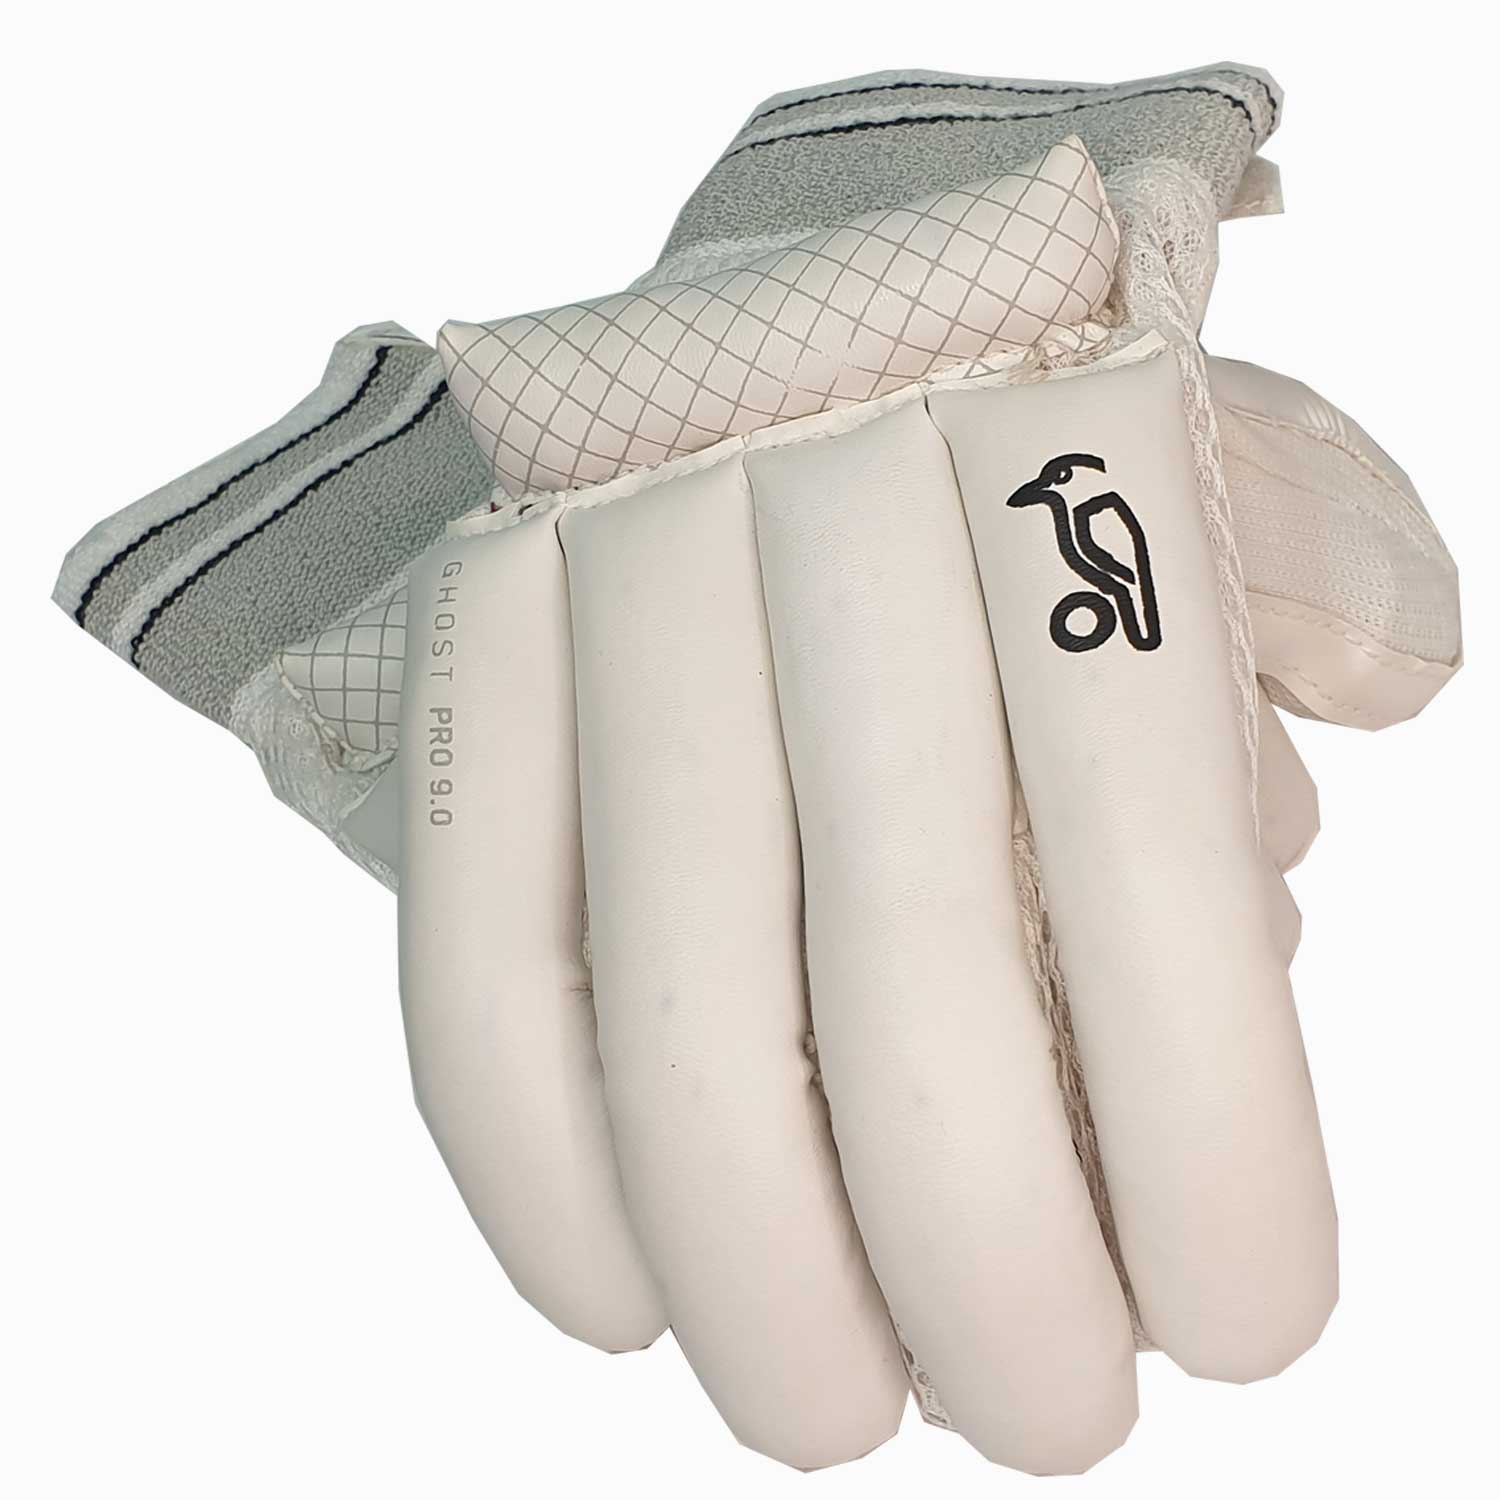 Kookaburra Ghost Pro 9.0 Cricket Batting Gloves